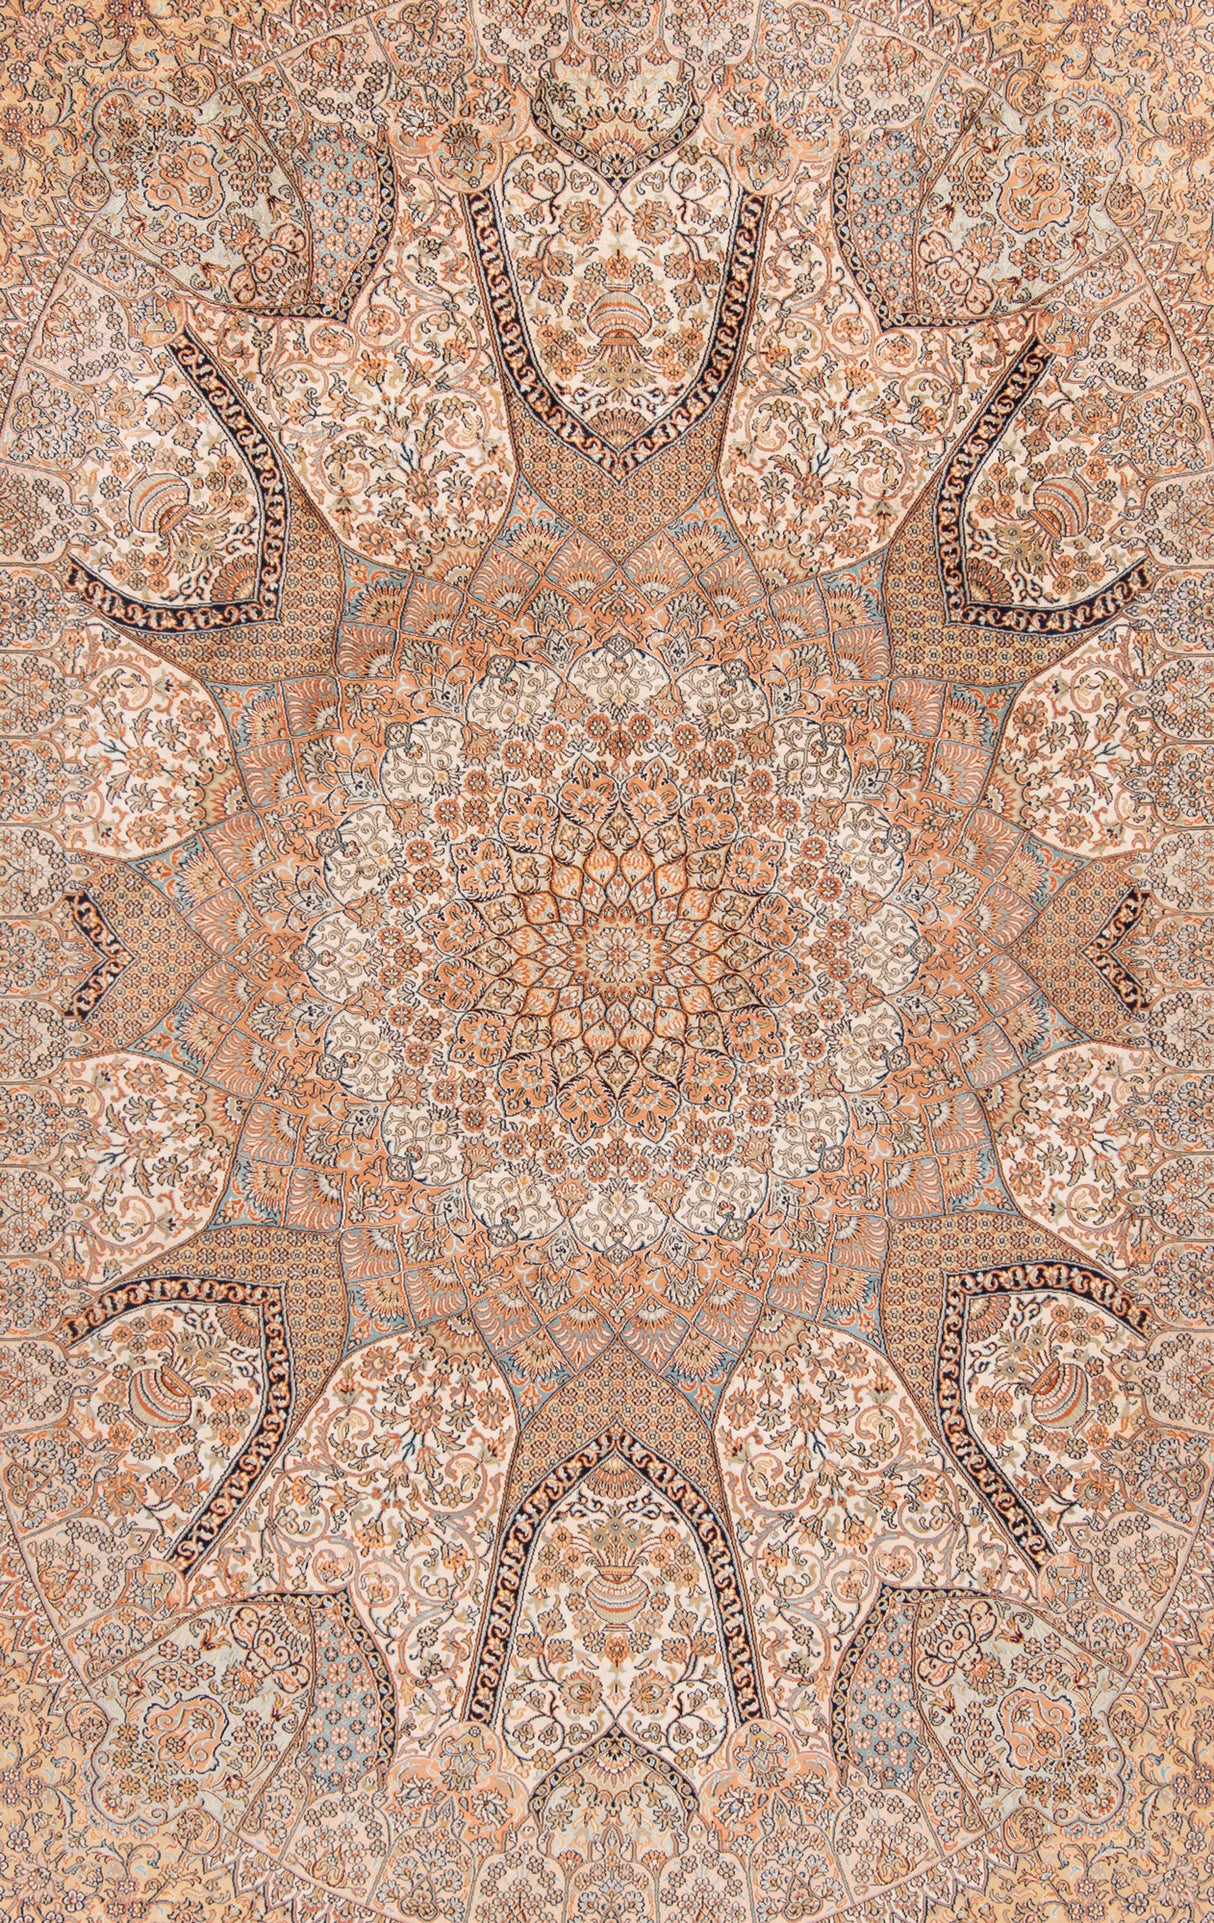 Seda da Caxemira Pura | 342 x 243 cm